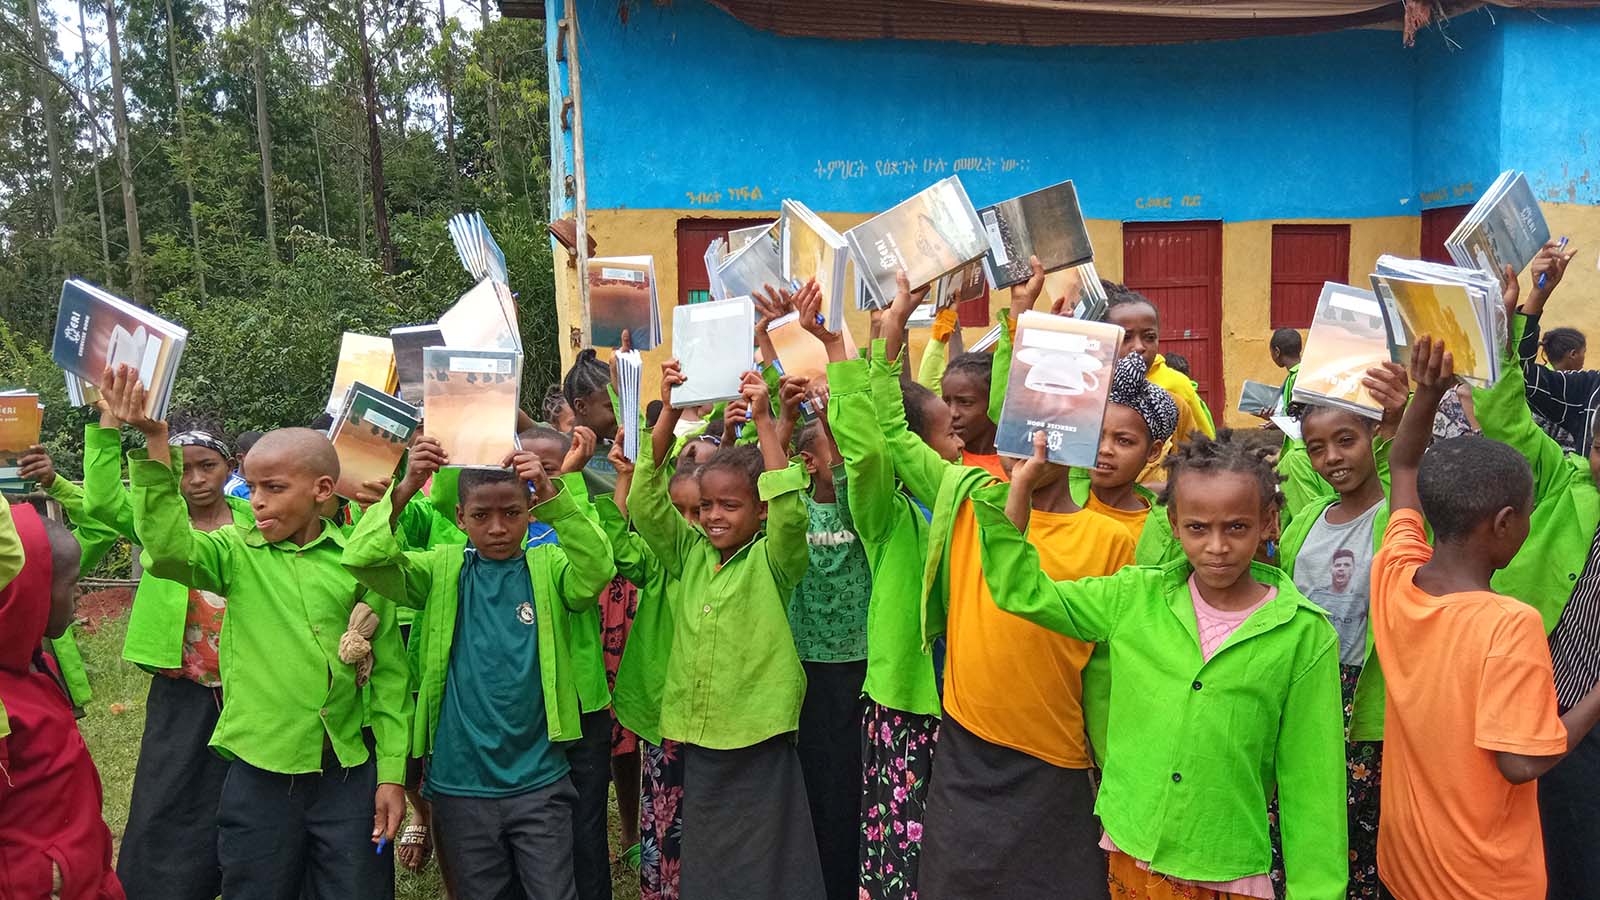 Children at Walana School Ethiopia holding new school supplies